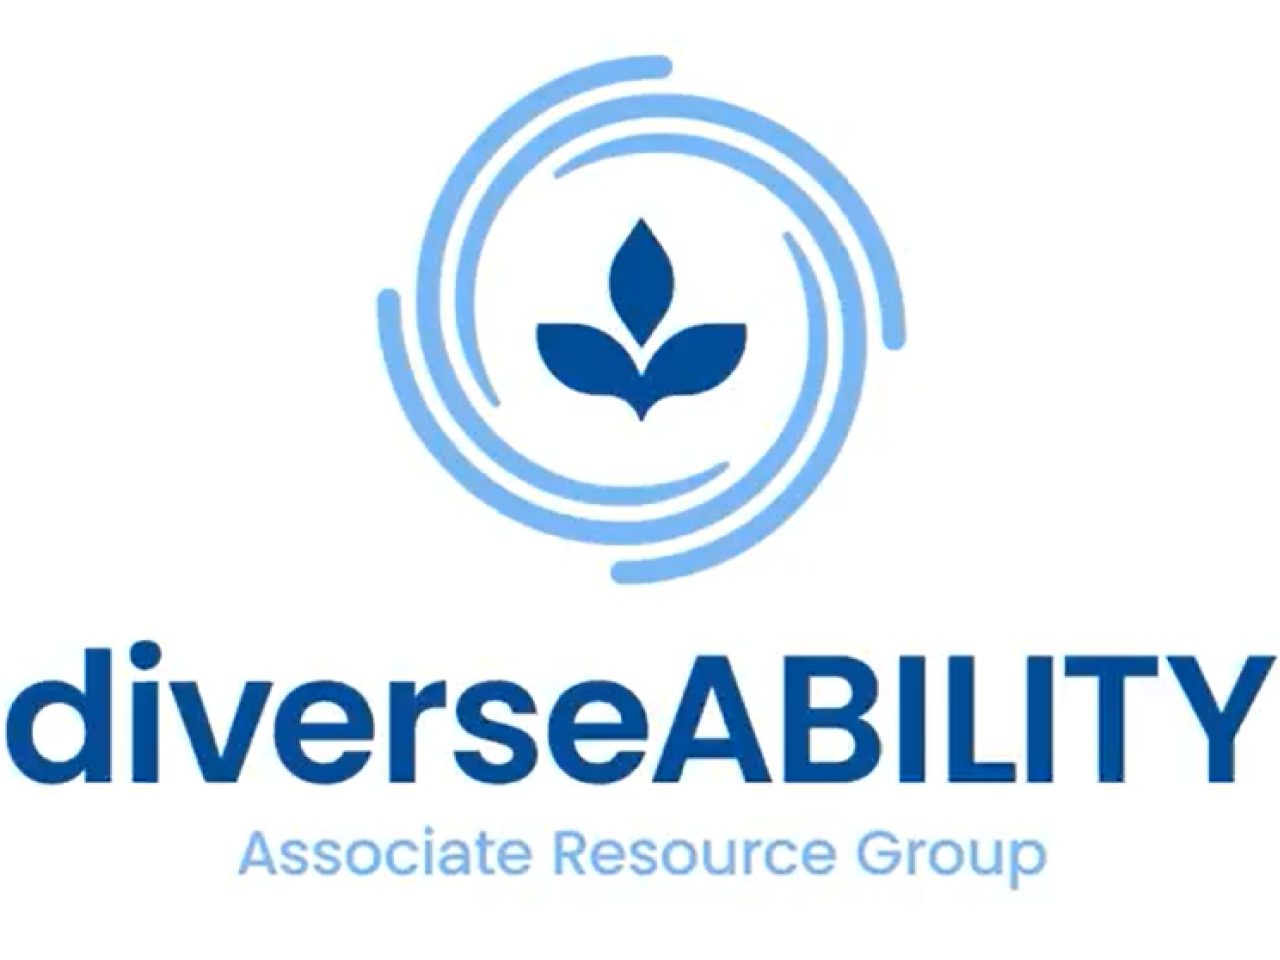 Albertsons Companies' diverseABILITY associate resource group logo